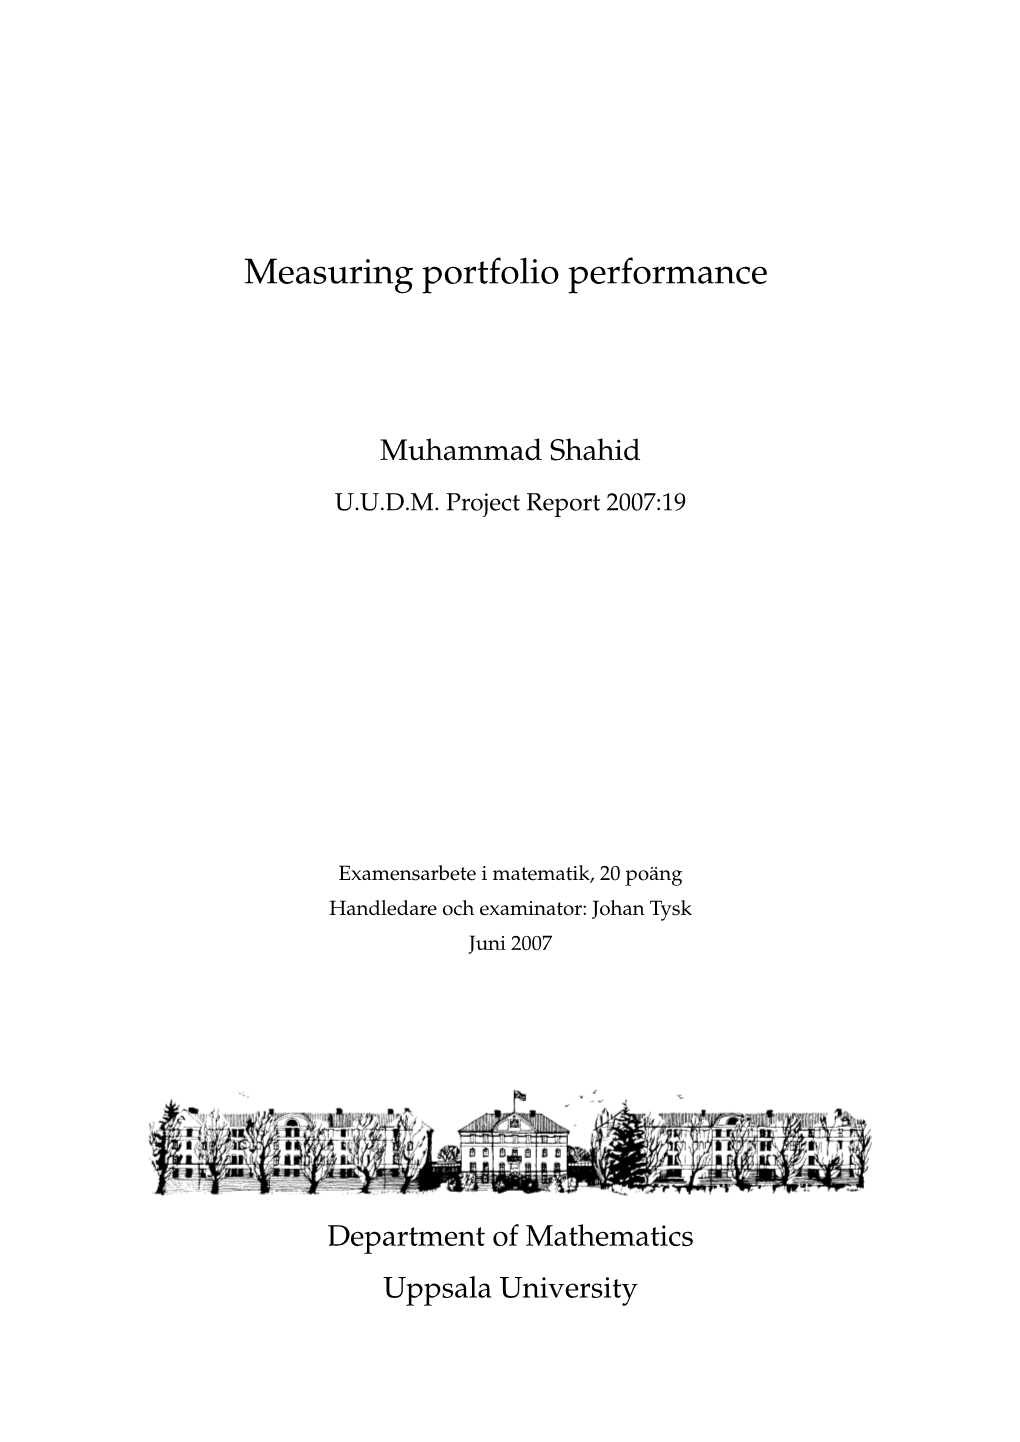 Measuring Portfolio Performance